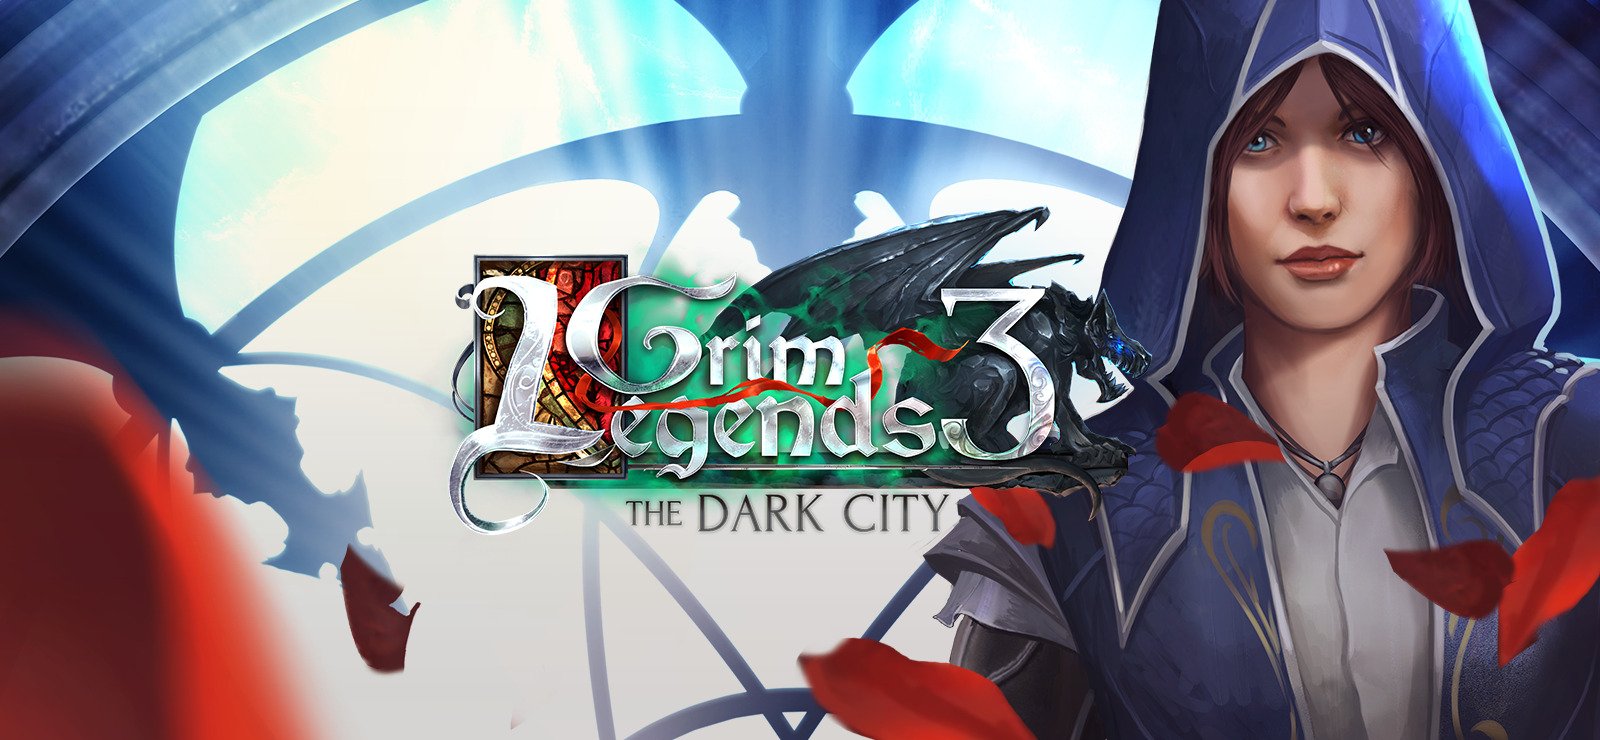 Grim Legends 3 The Dark City 9